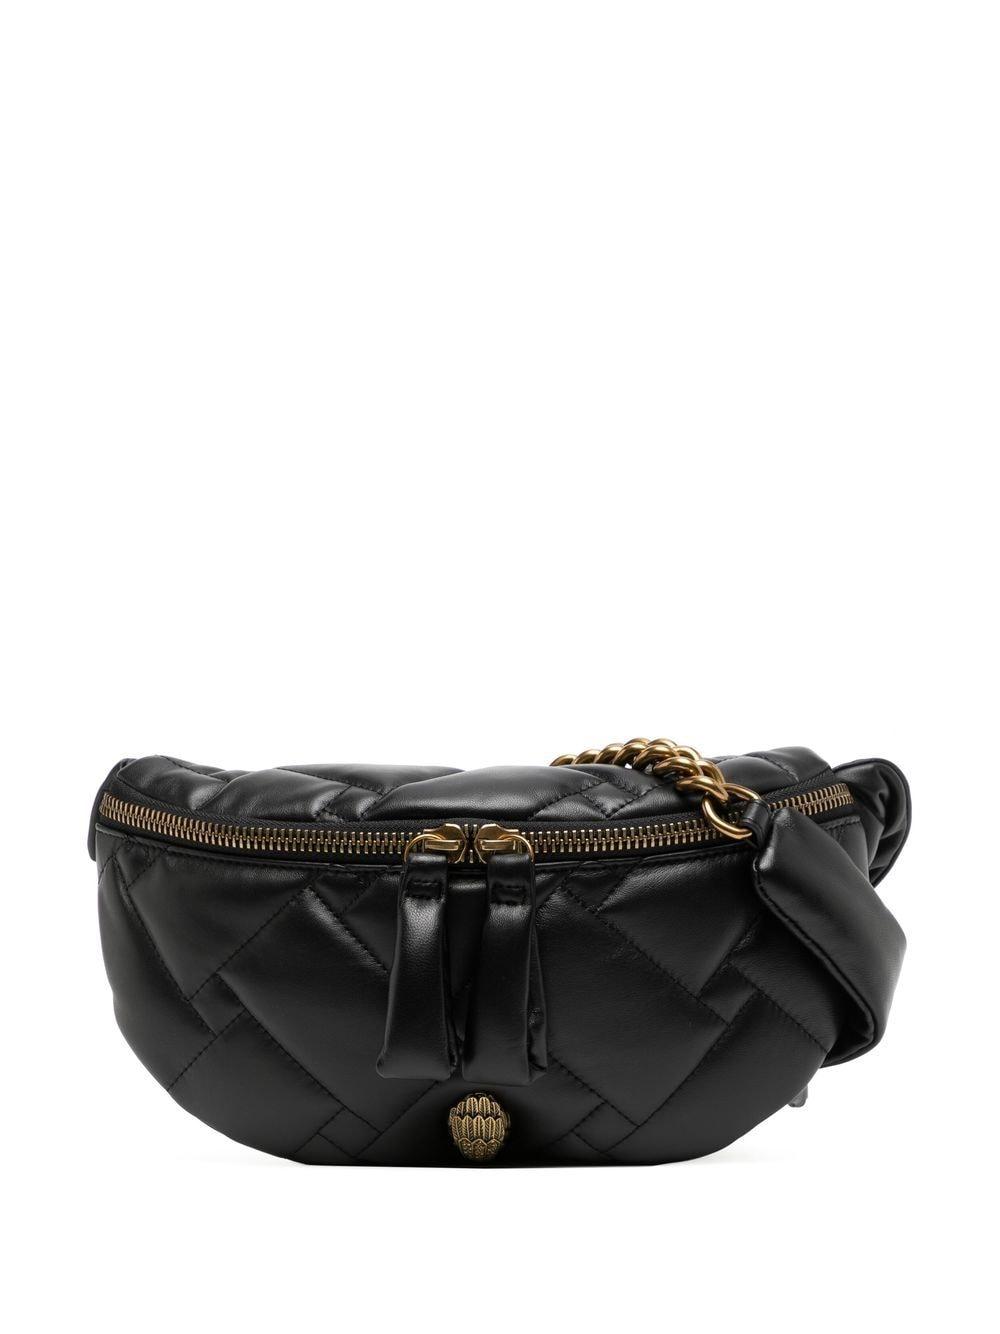 Kurt Geiger Kensington Soft Belt Bag in Black | Lyst